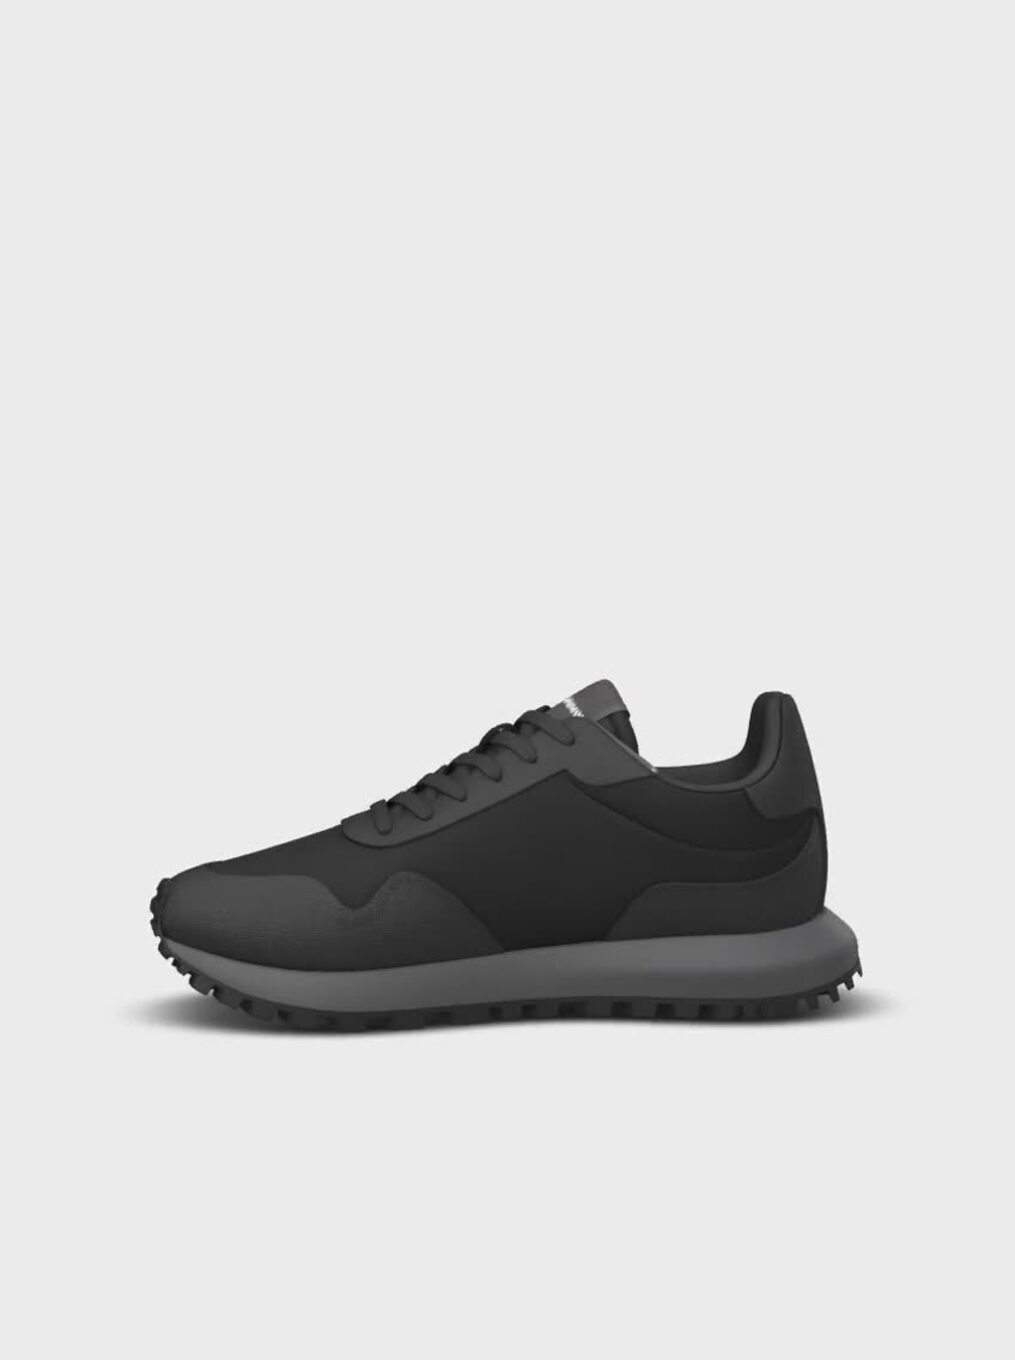 The Original Slip On Sneaker in Black | Women's Shoes | Rothy's